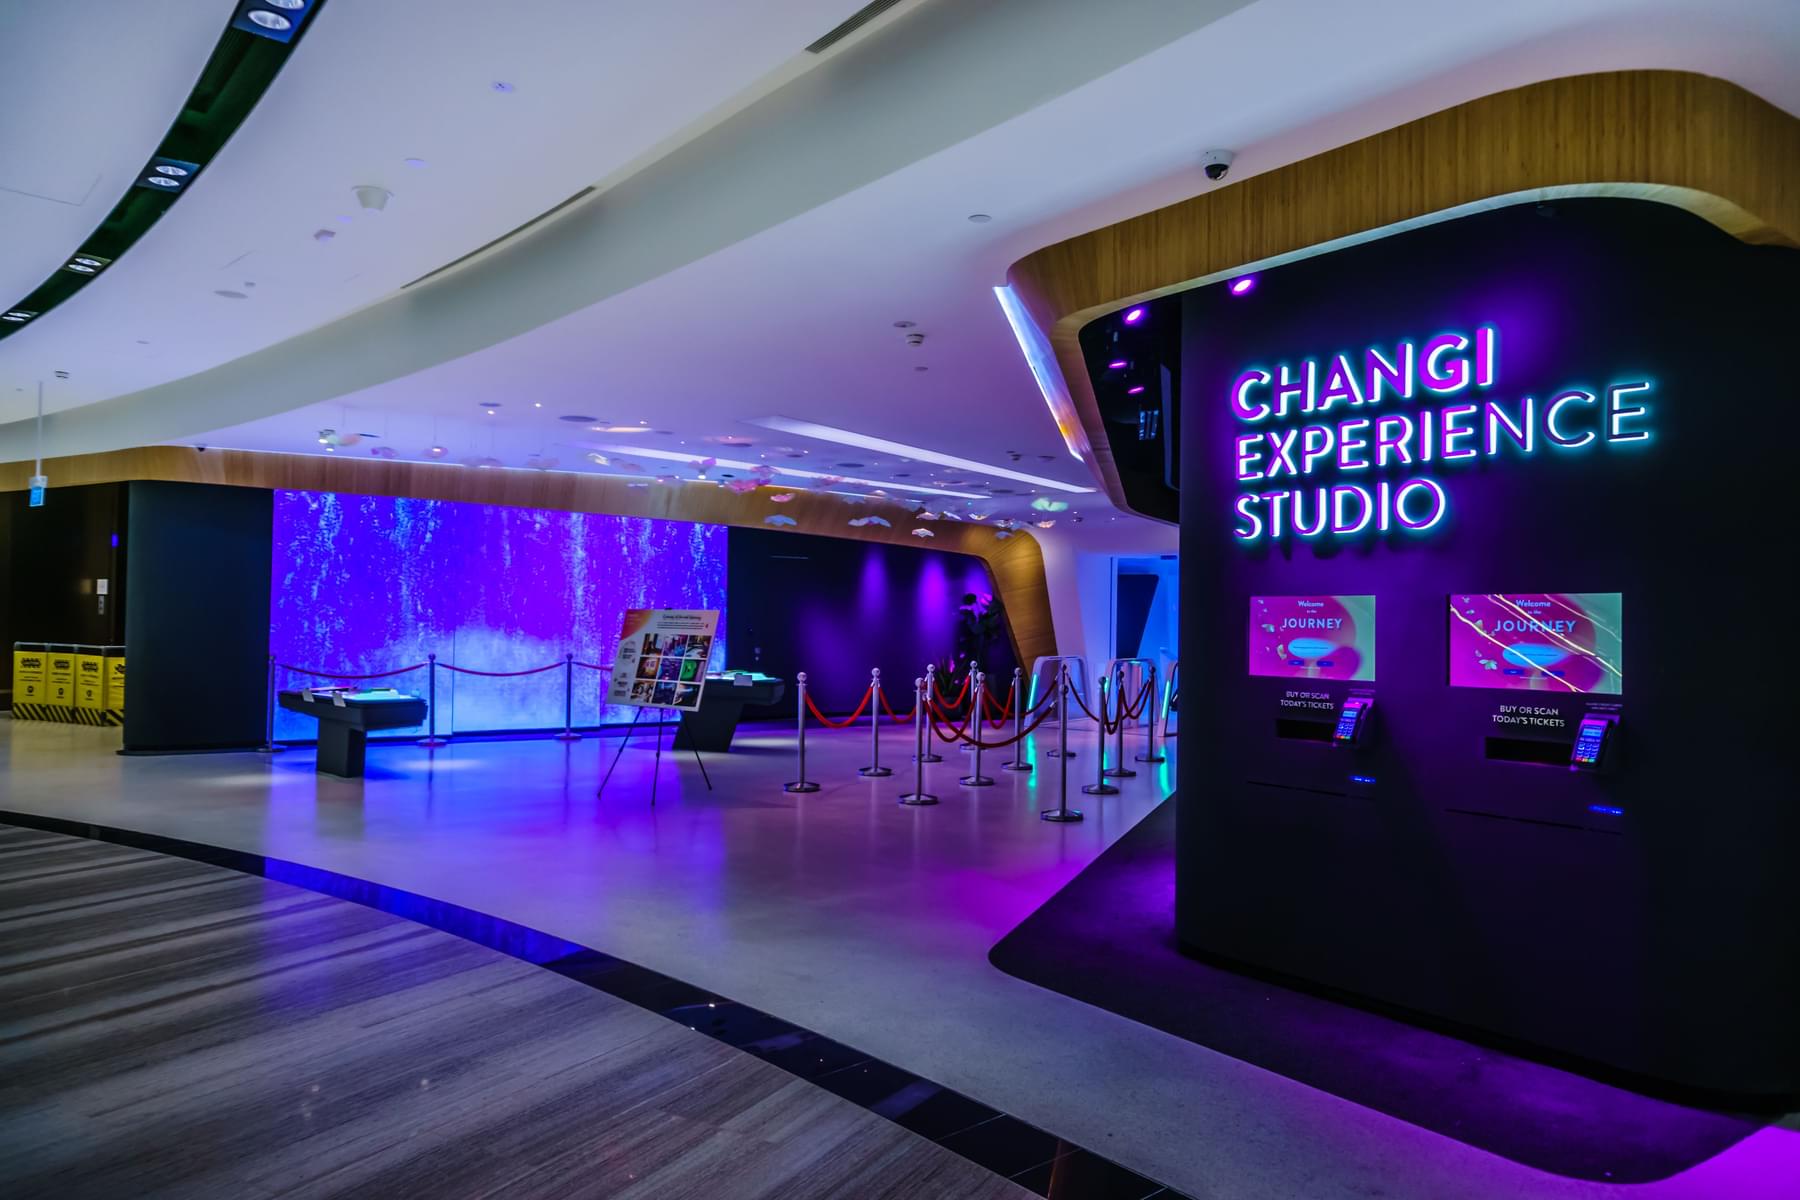 Changi Experience Studio